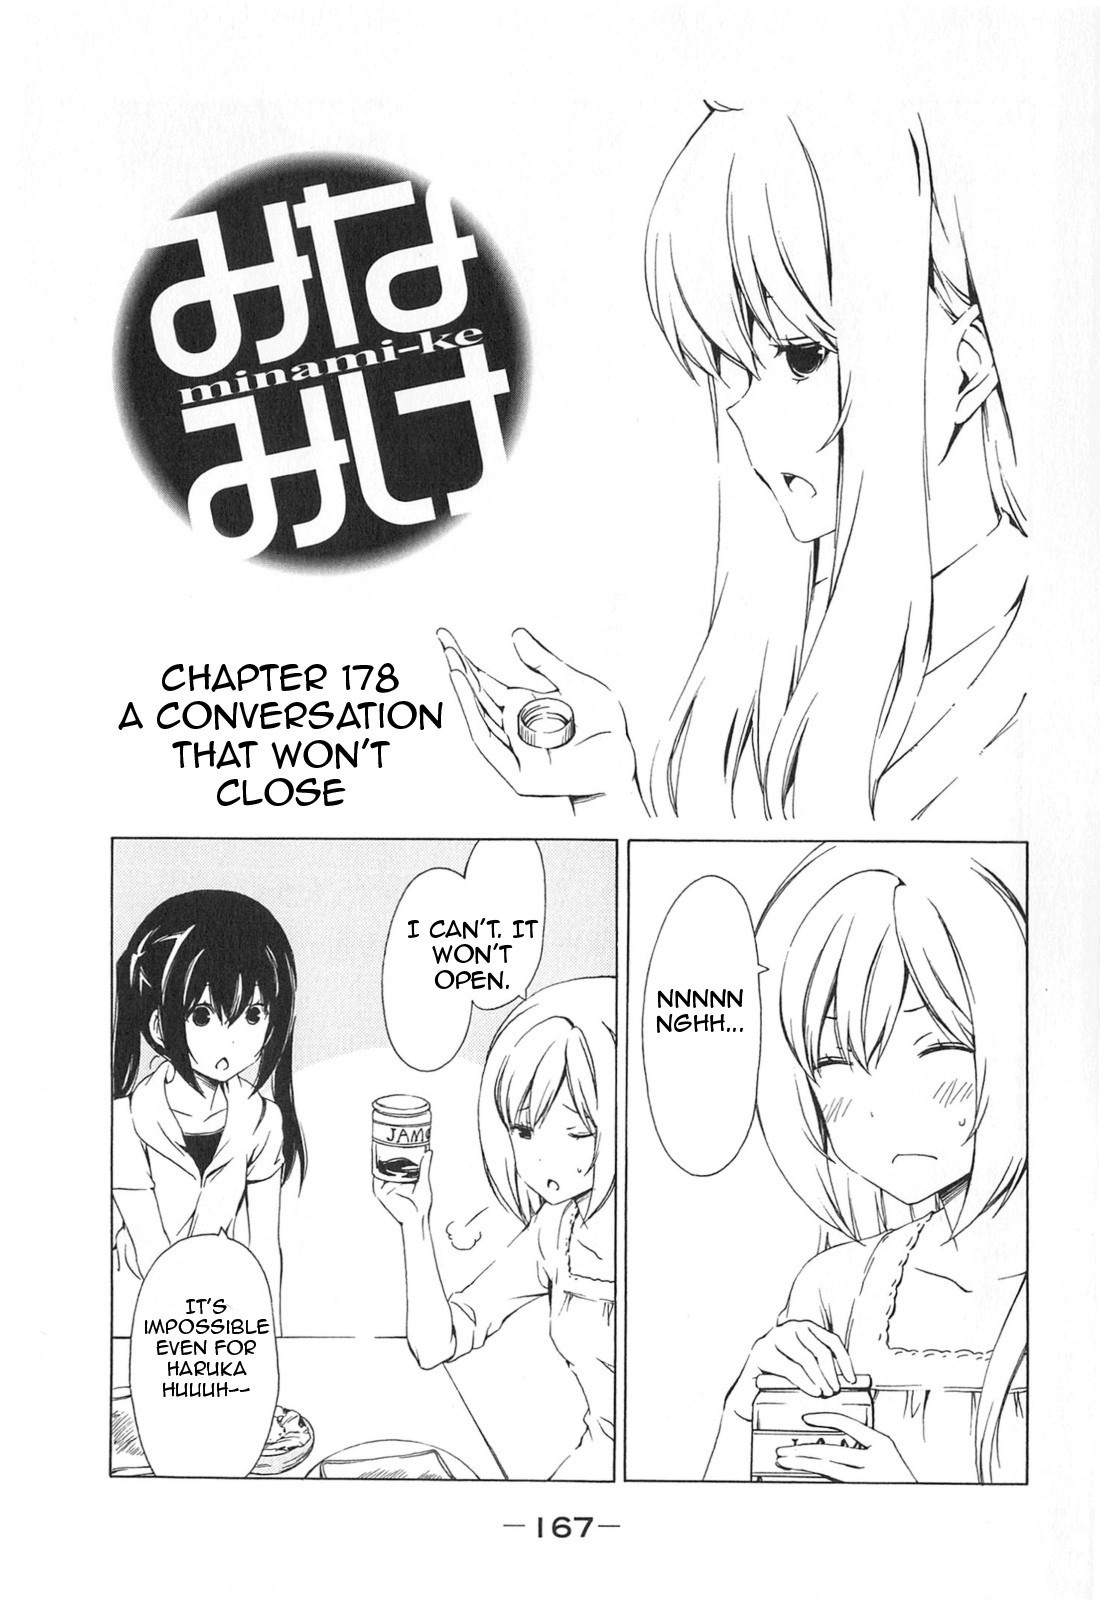 Minami-ke chapter 178 page 1